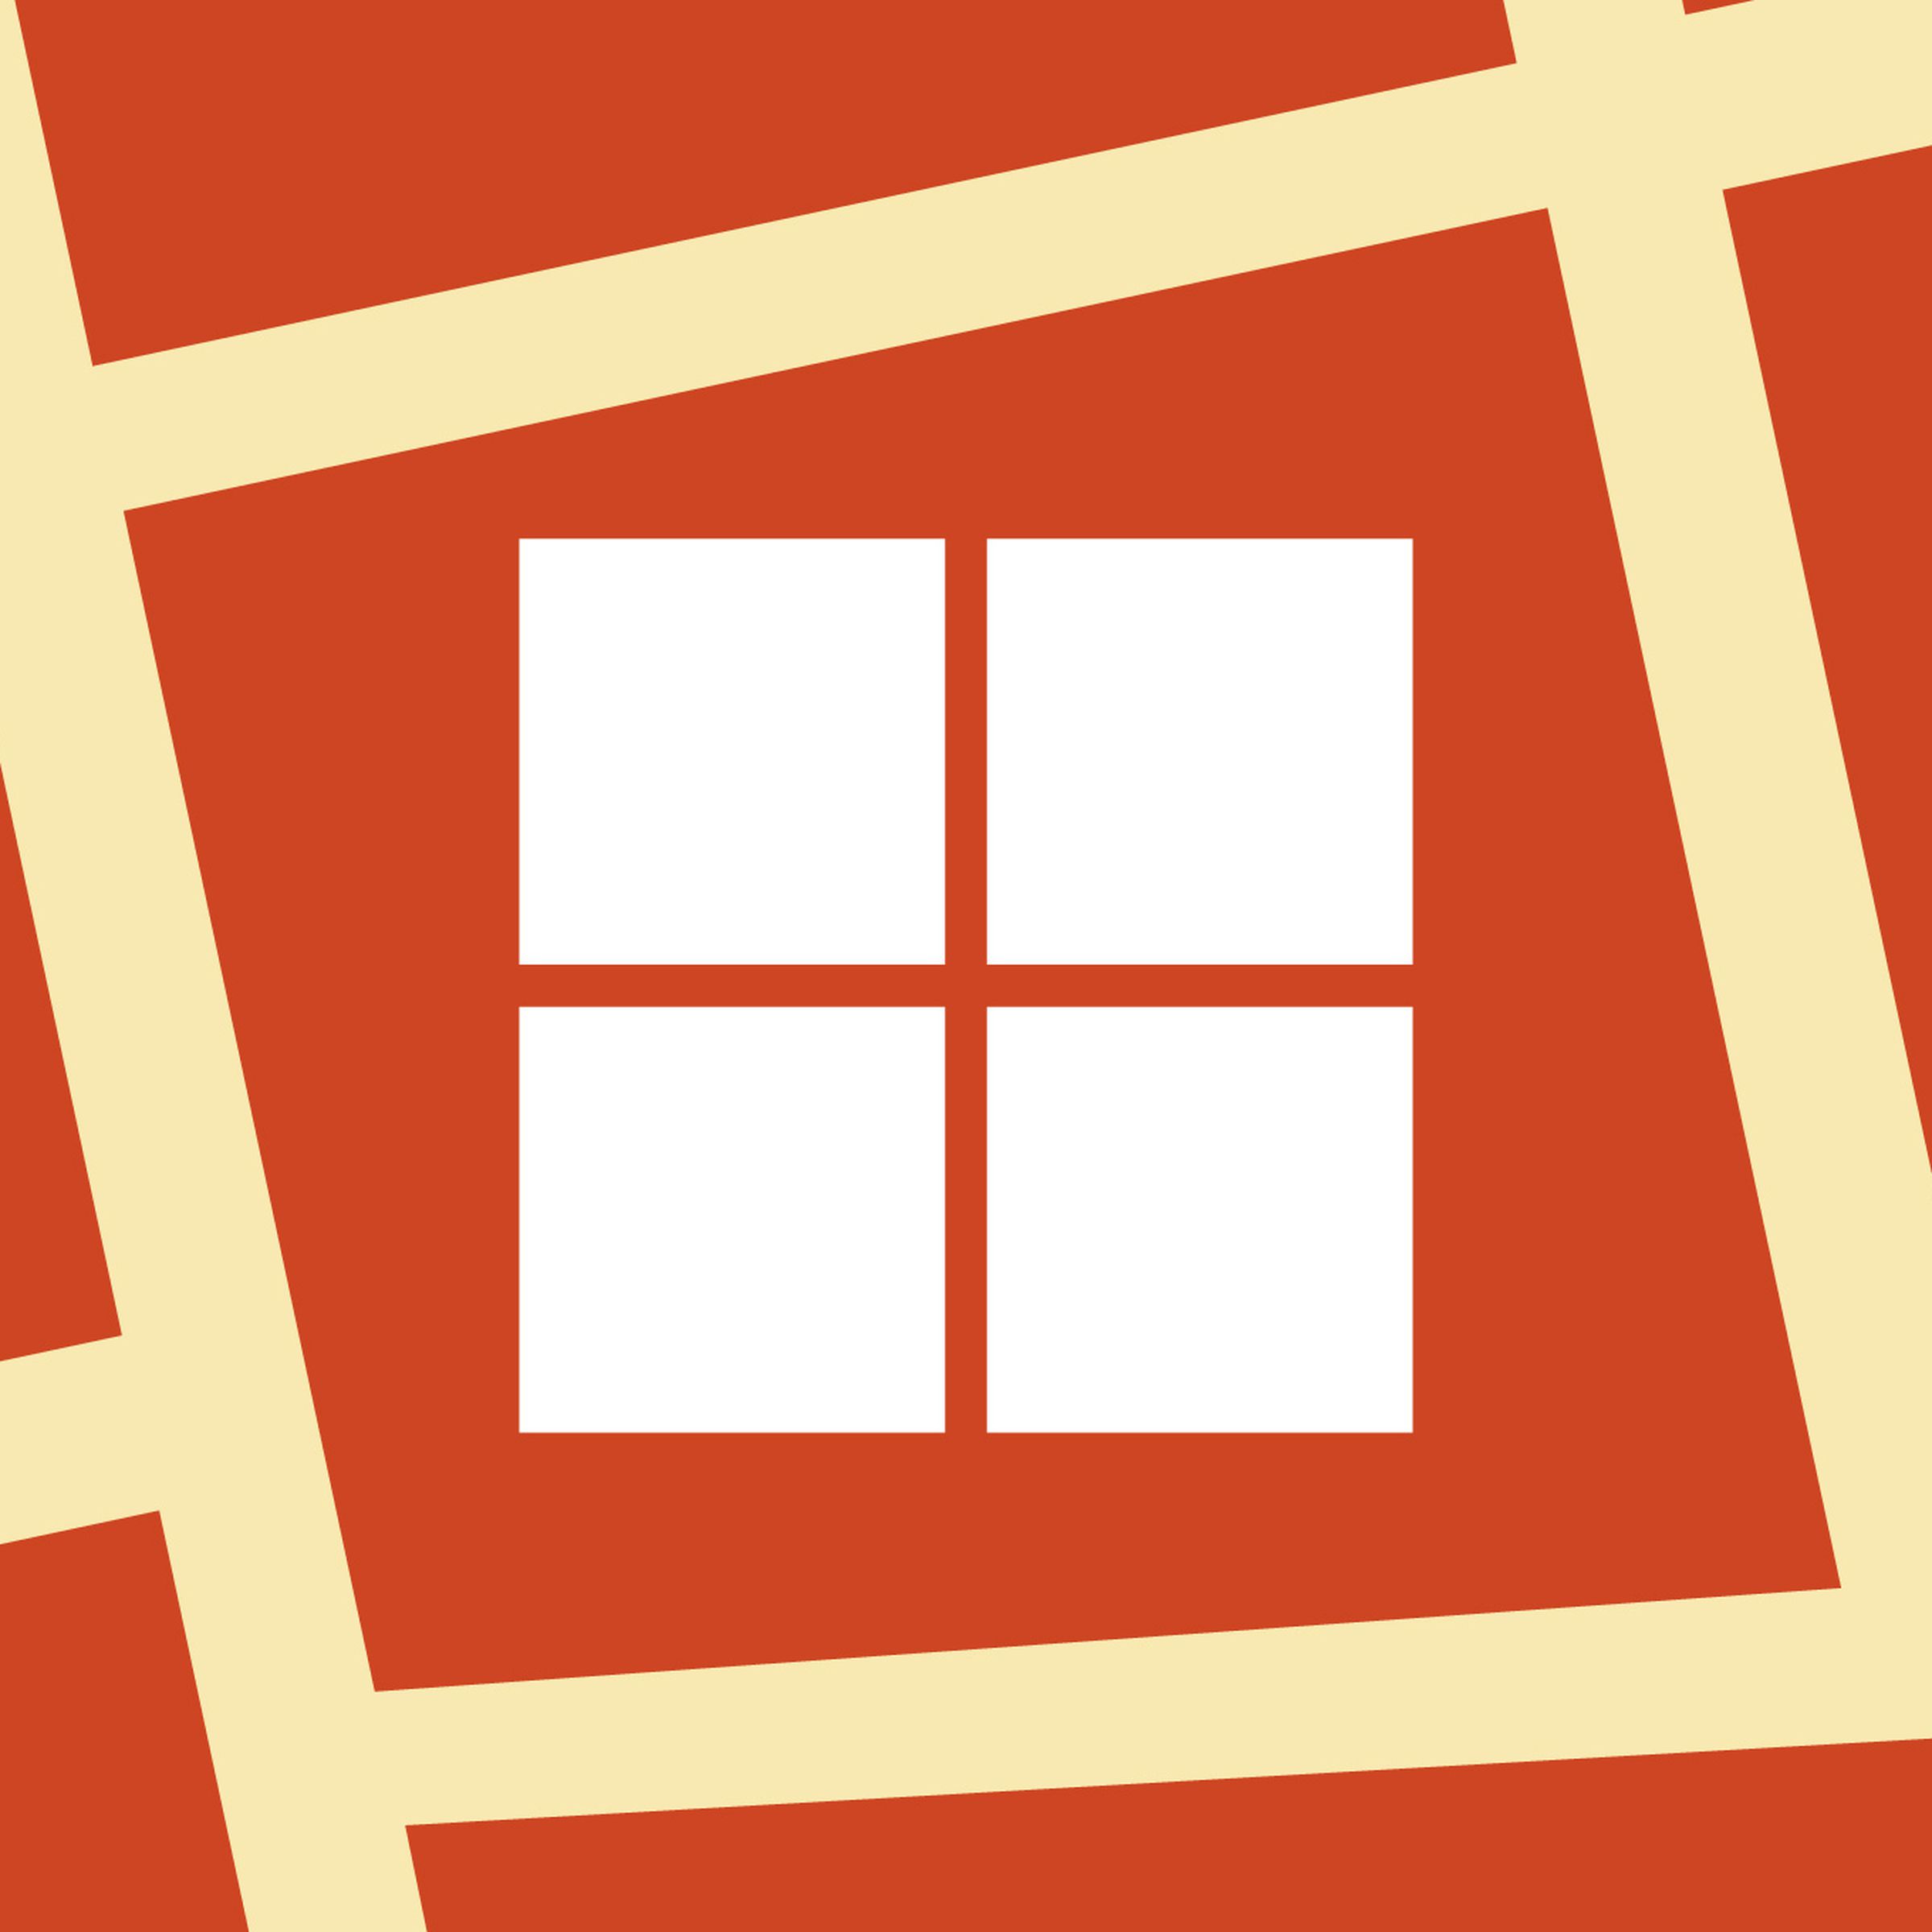 The Microsoft logo on an orange background